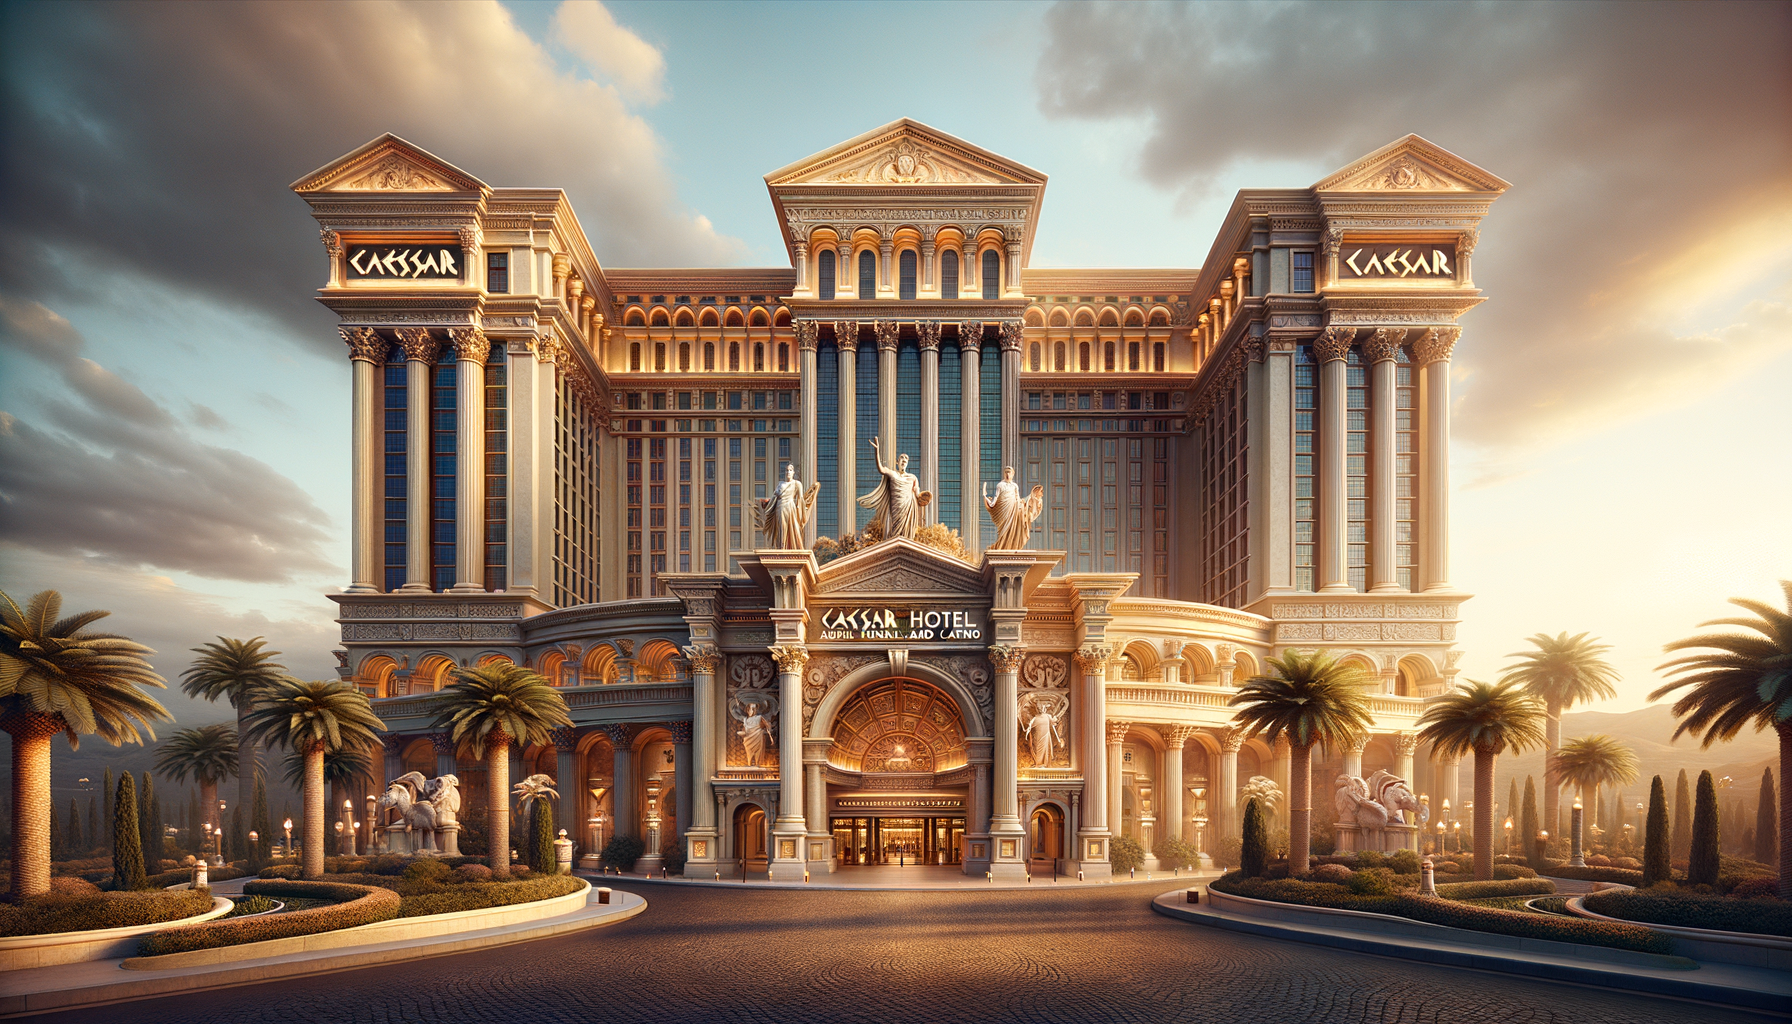 The Luxurious Caesar Hotel and Casino